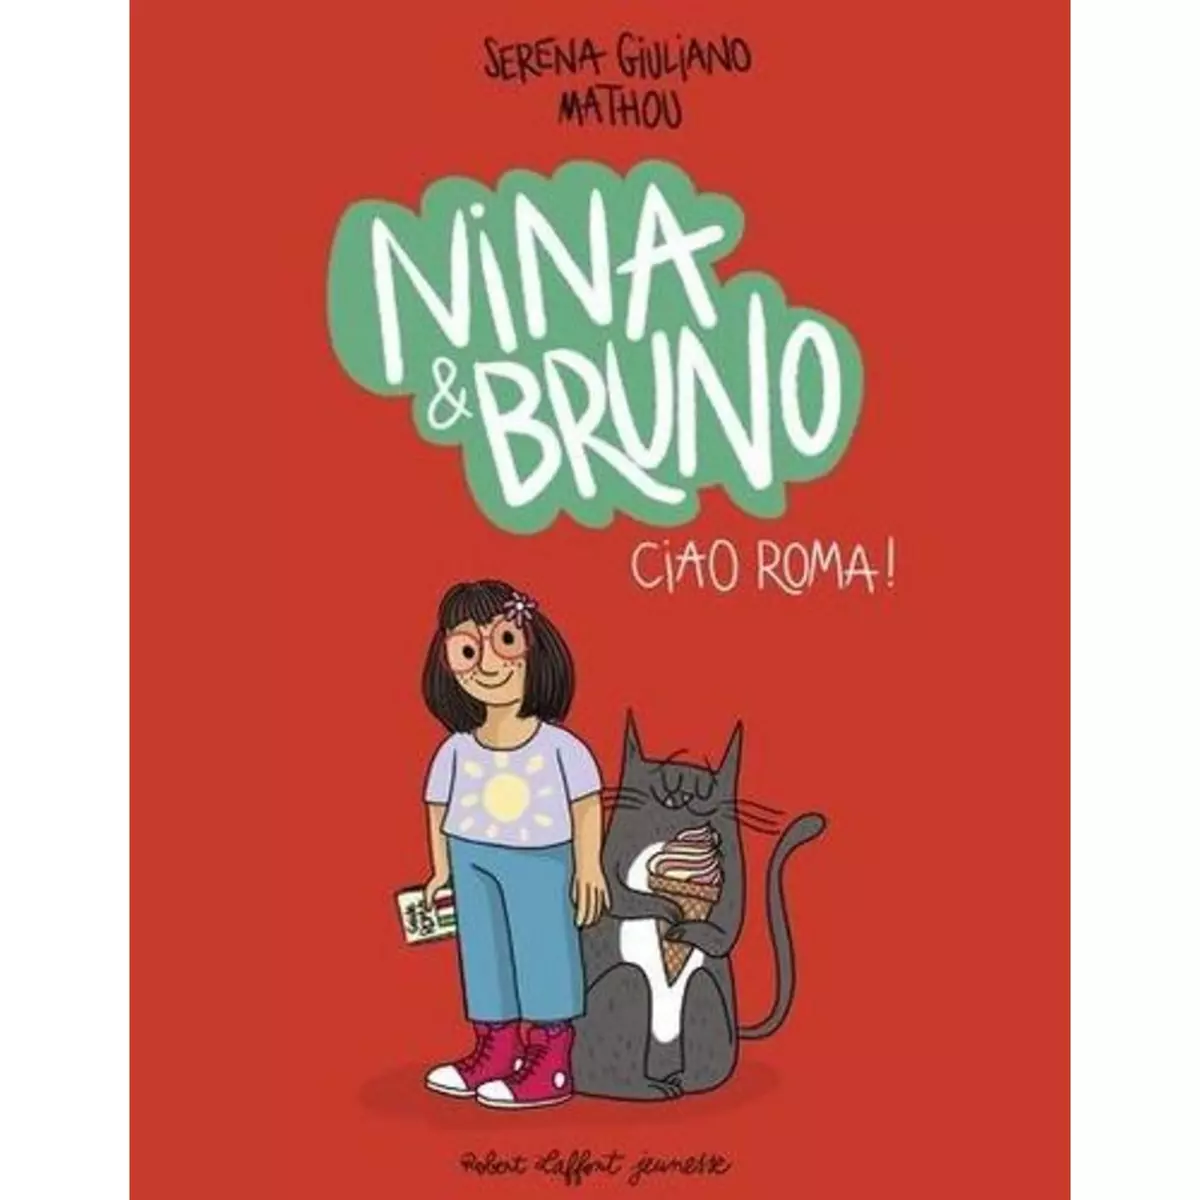  NINA & BRUNO, Giuliano Serena